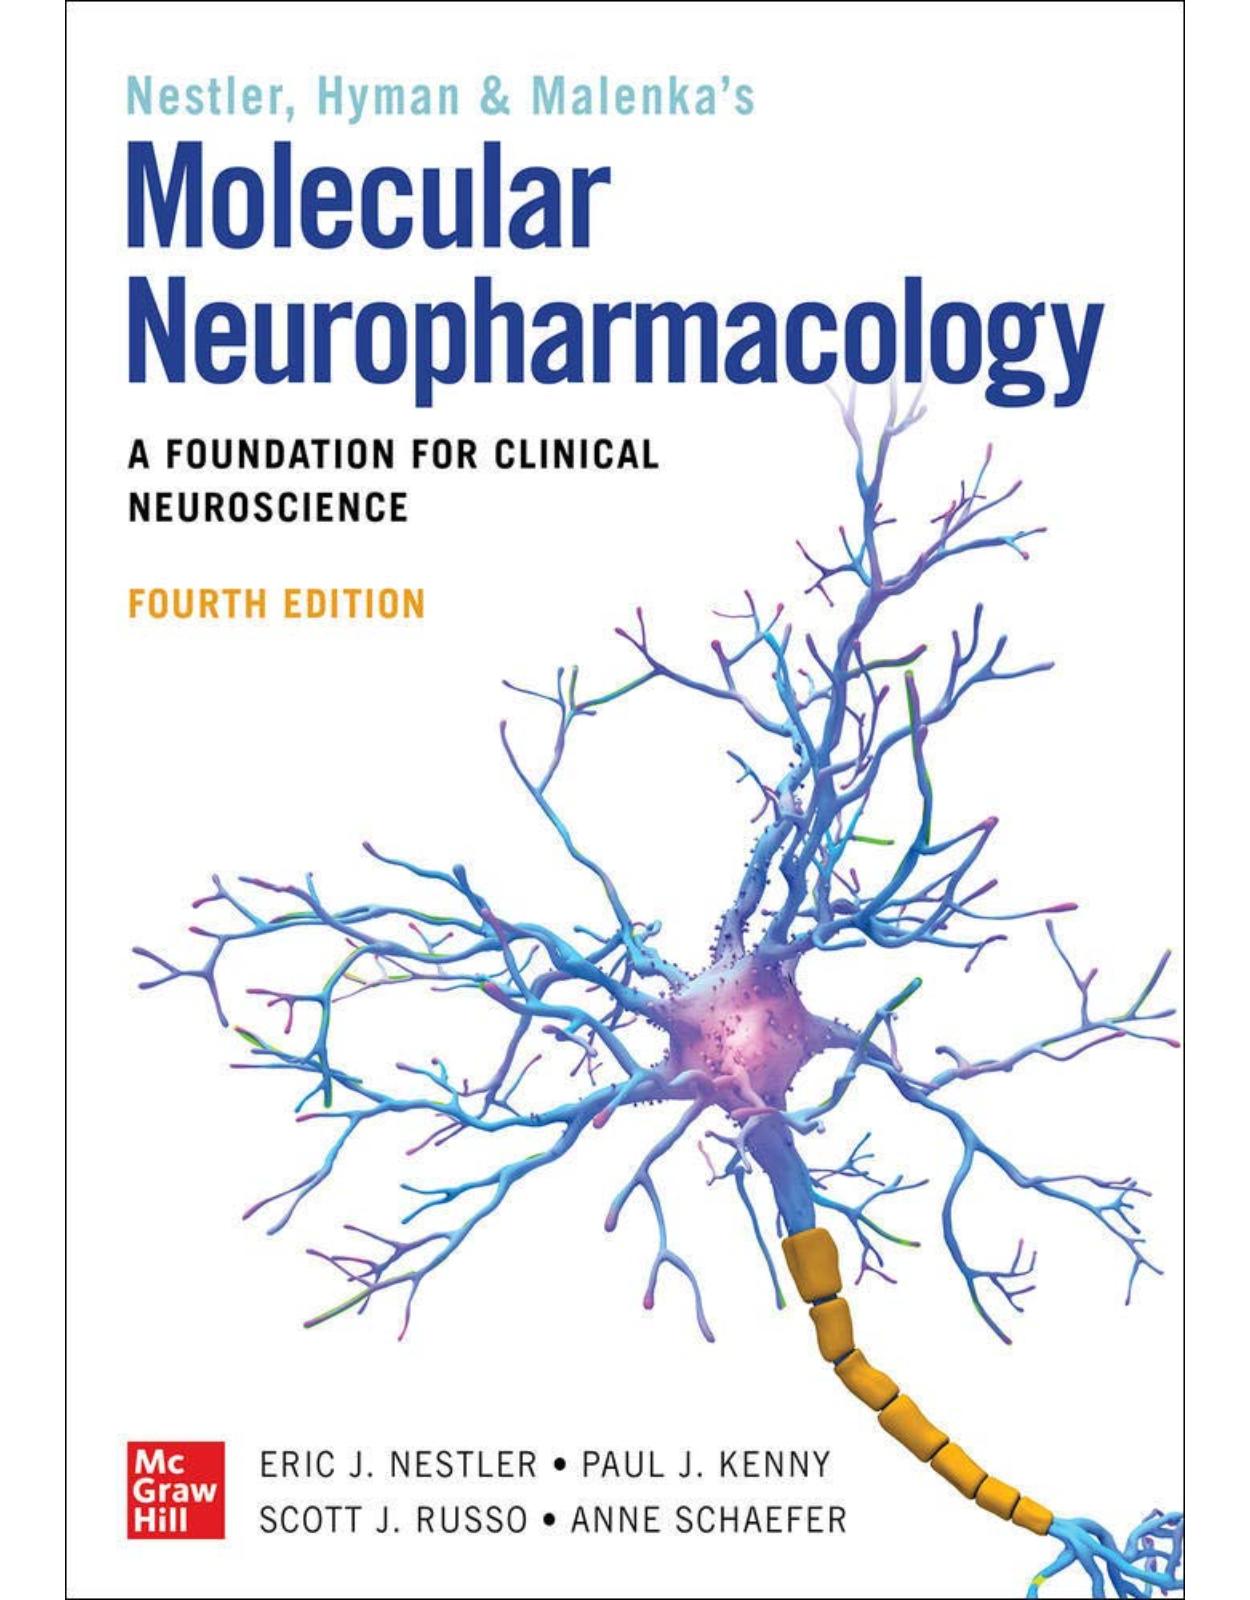 Molecular Neuropharmacology: A Foundation for Clinical Neuroscience, Fourth Edition